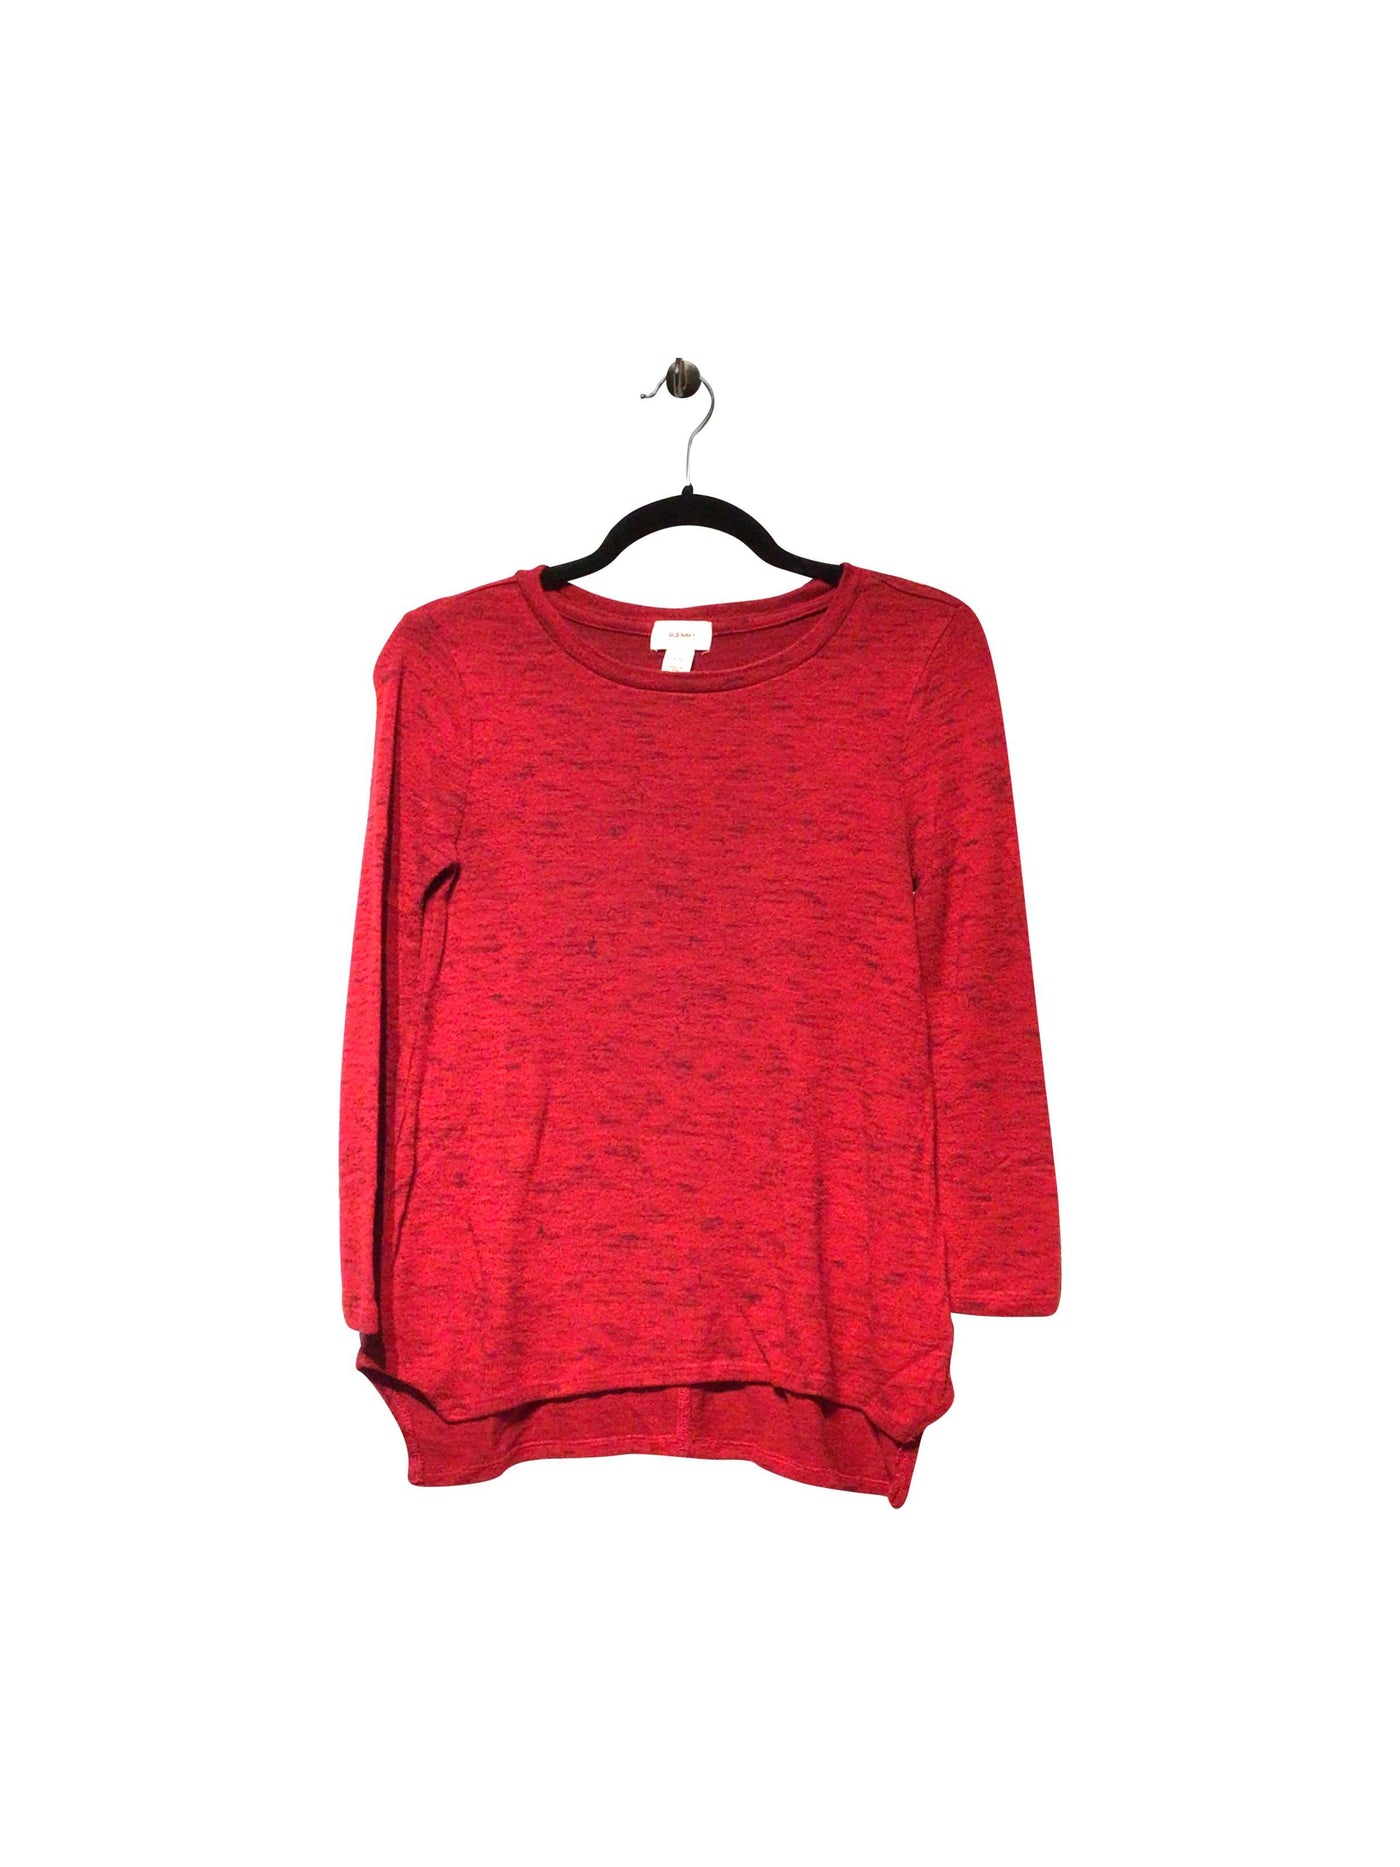 OLD NAVY Regular fit T-shirt in Red  -  M  8.61 Koop